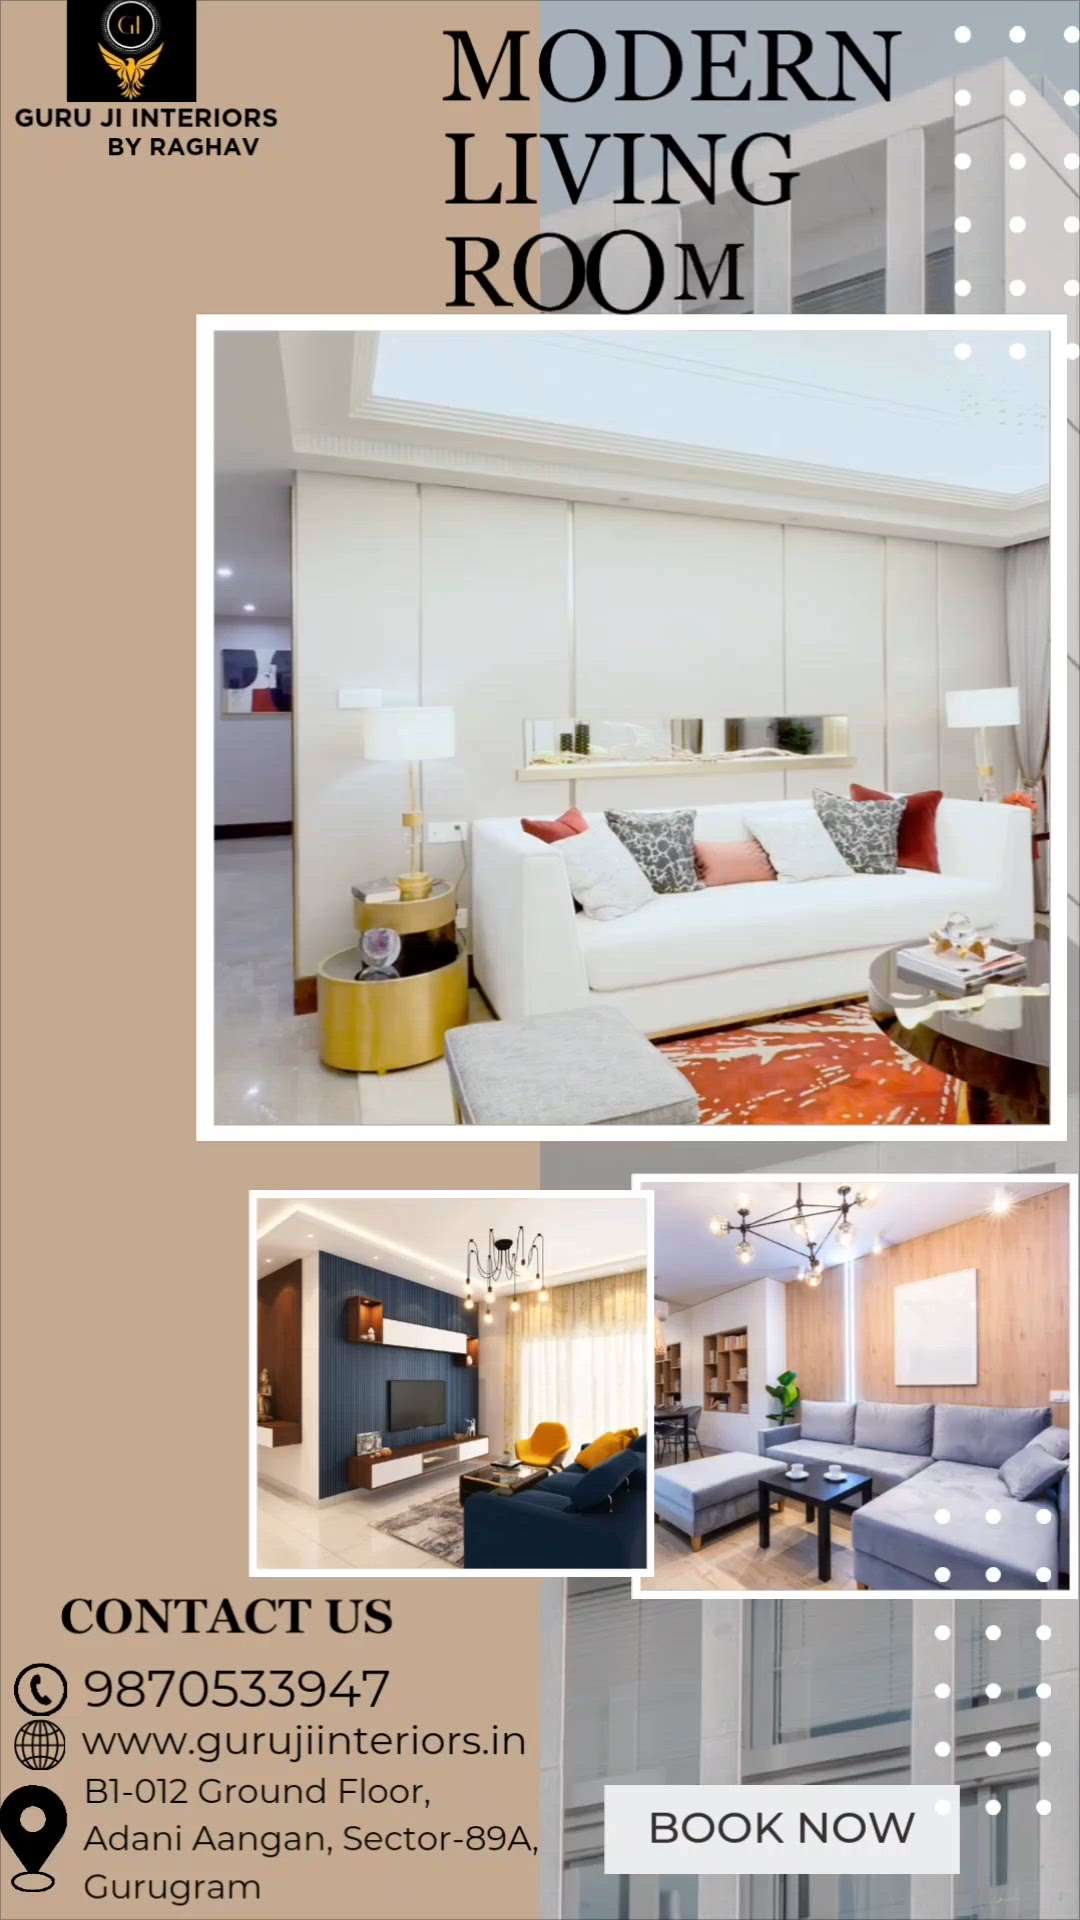 💫 Modern Living Room Design 
@ The perfect space to create memories with family.
Design  by - Raghav
Guru ji interiors 
Call - 9870533947
.
#luxury design idea #livingroom #Interiordesign #Moderninterior